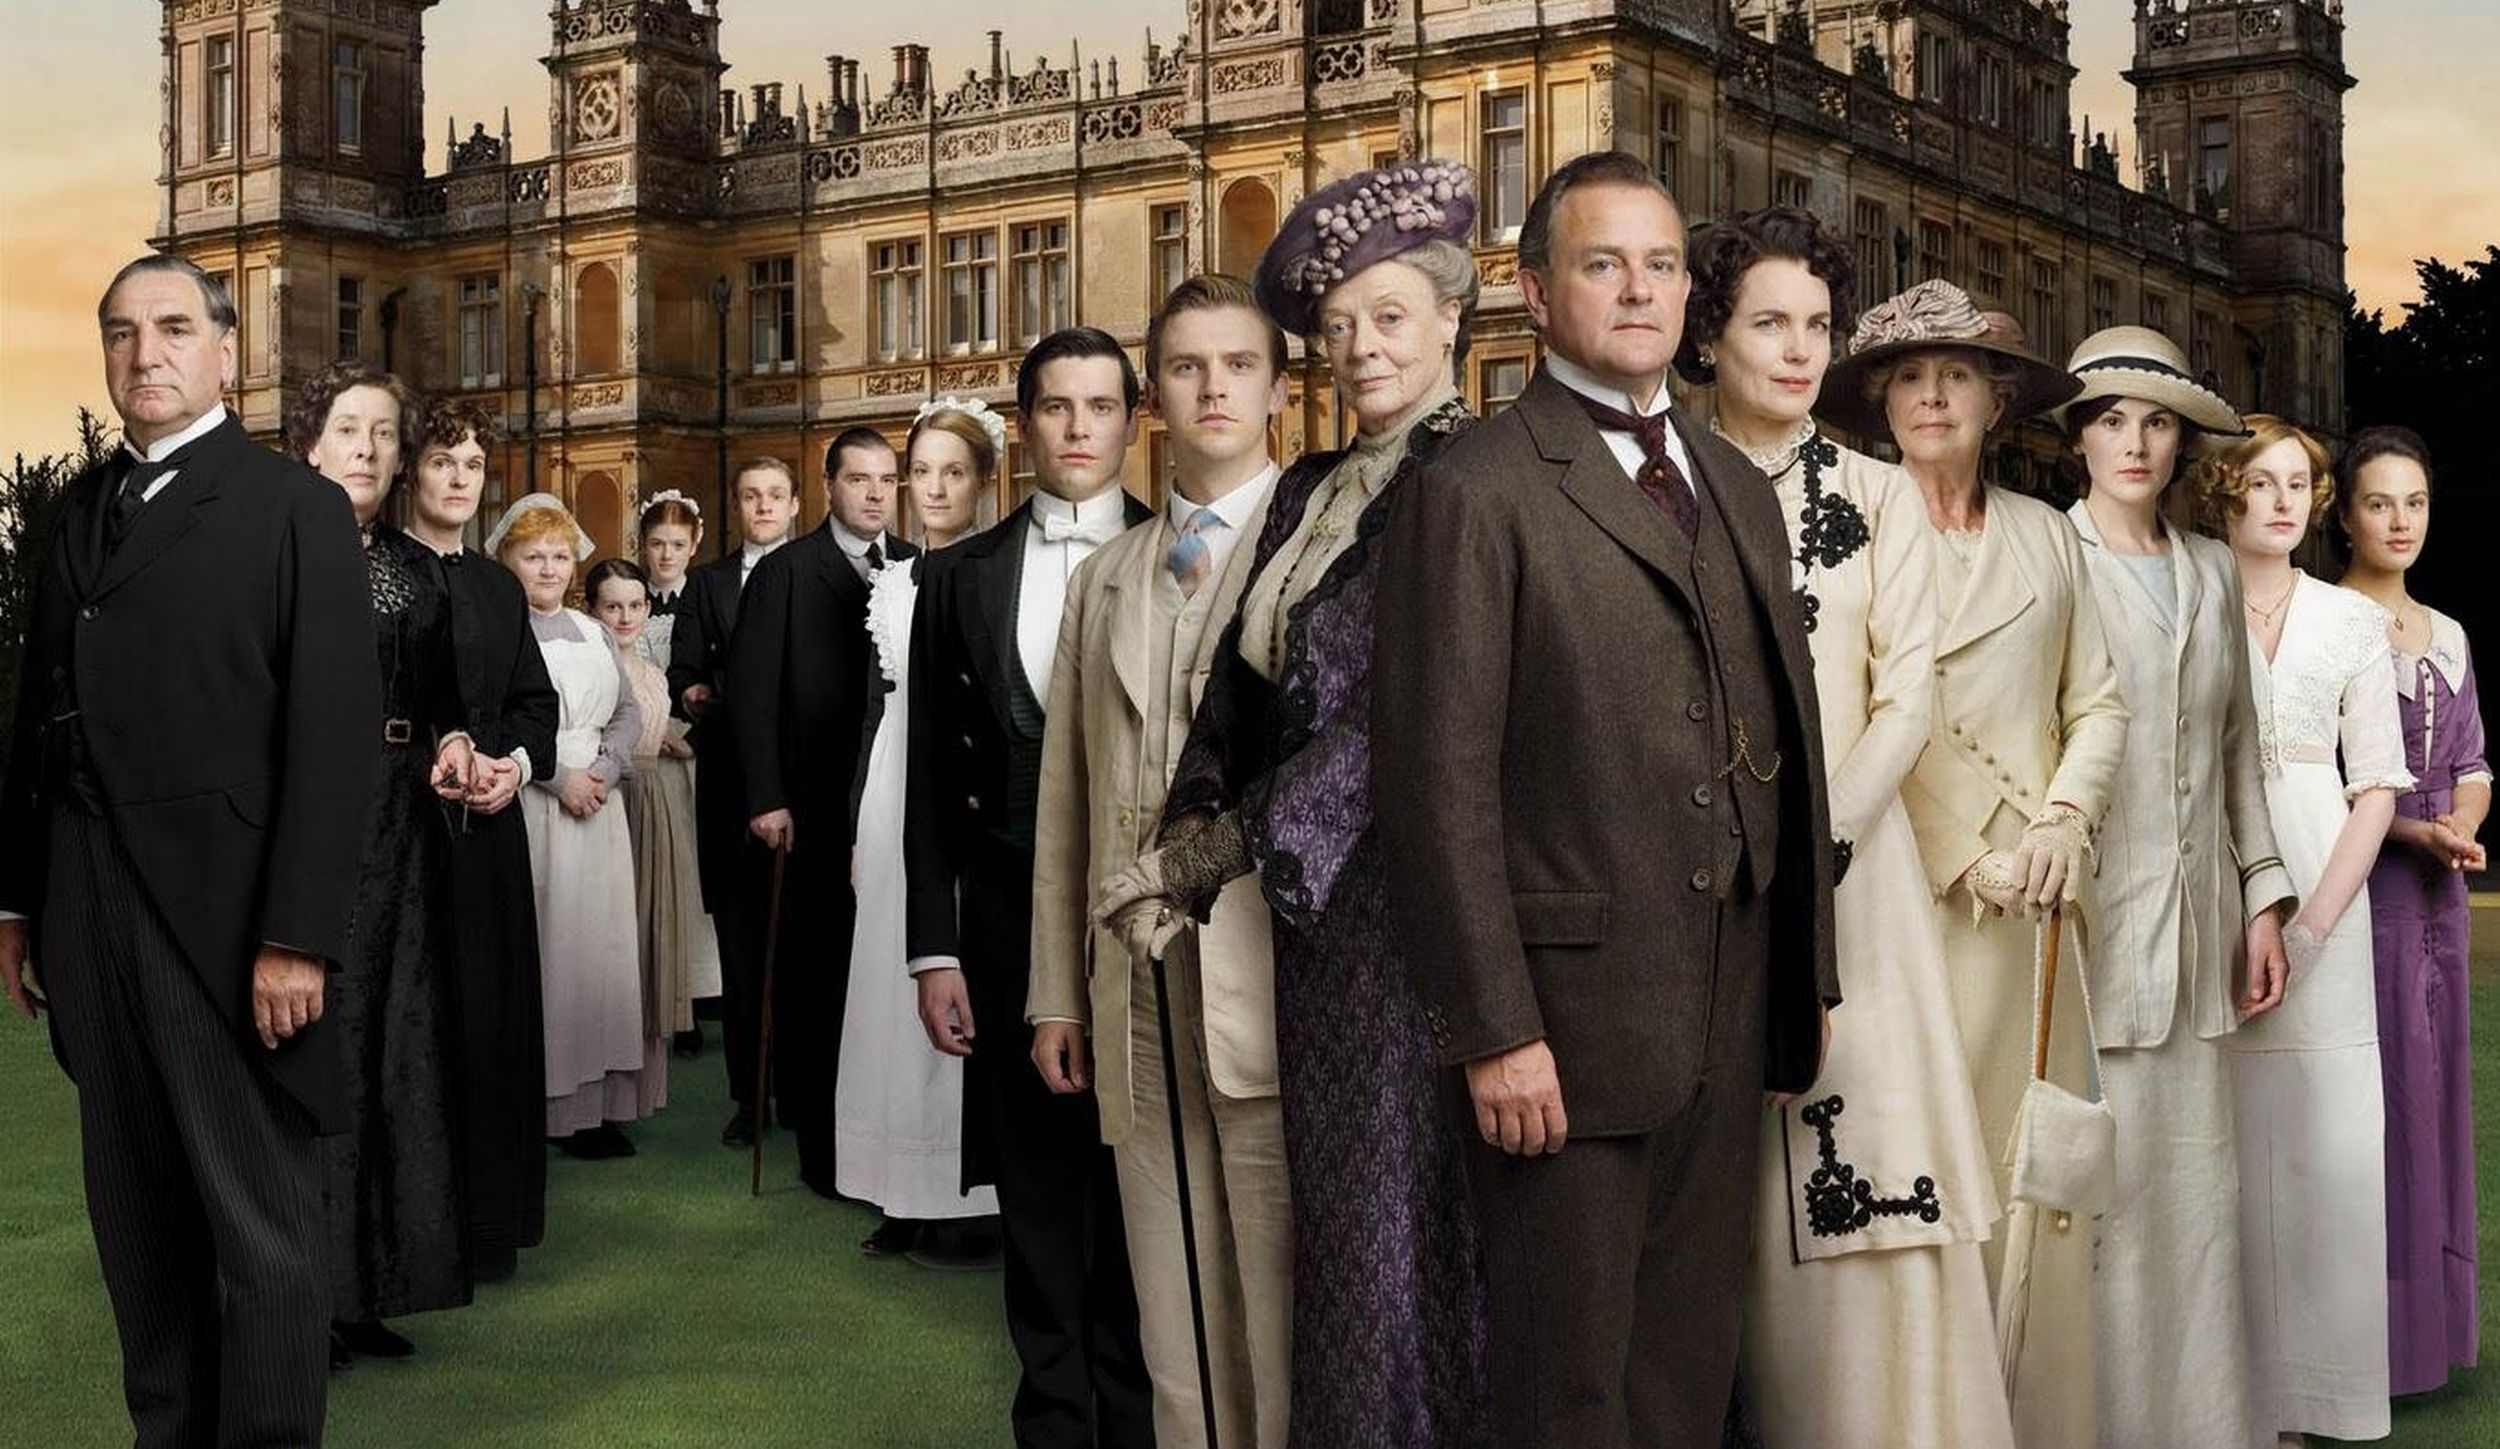 Downton Abbey (2010) - PBS Series - Where To Watch